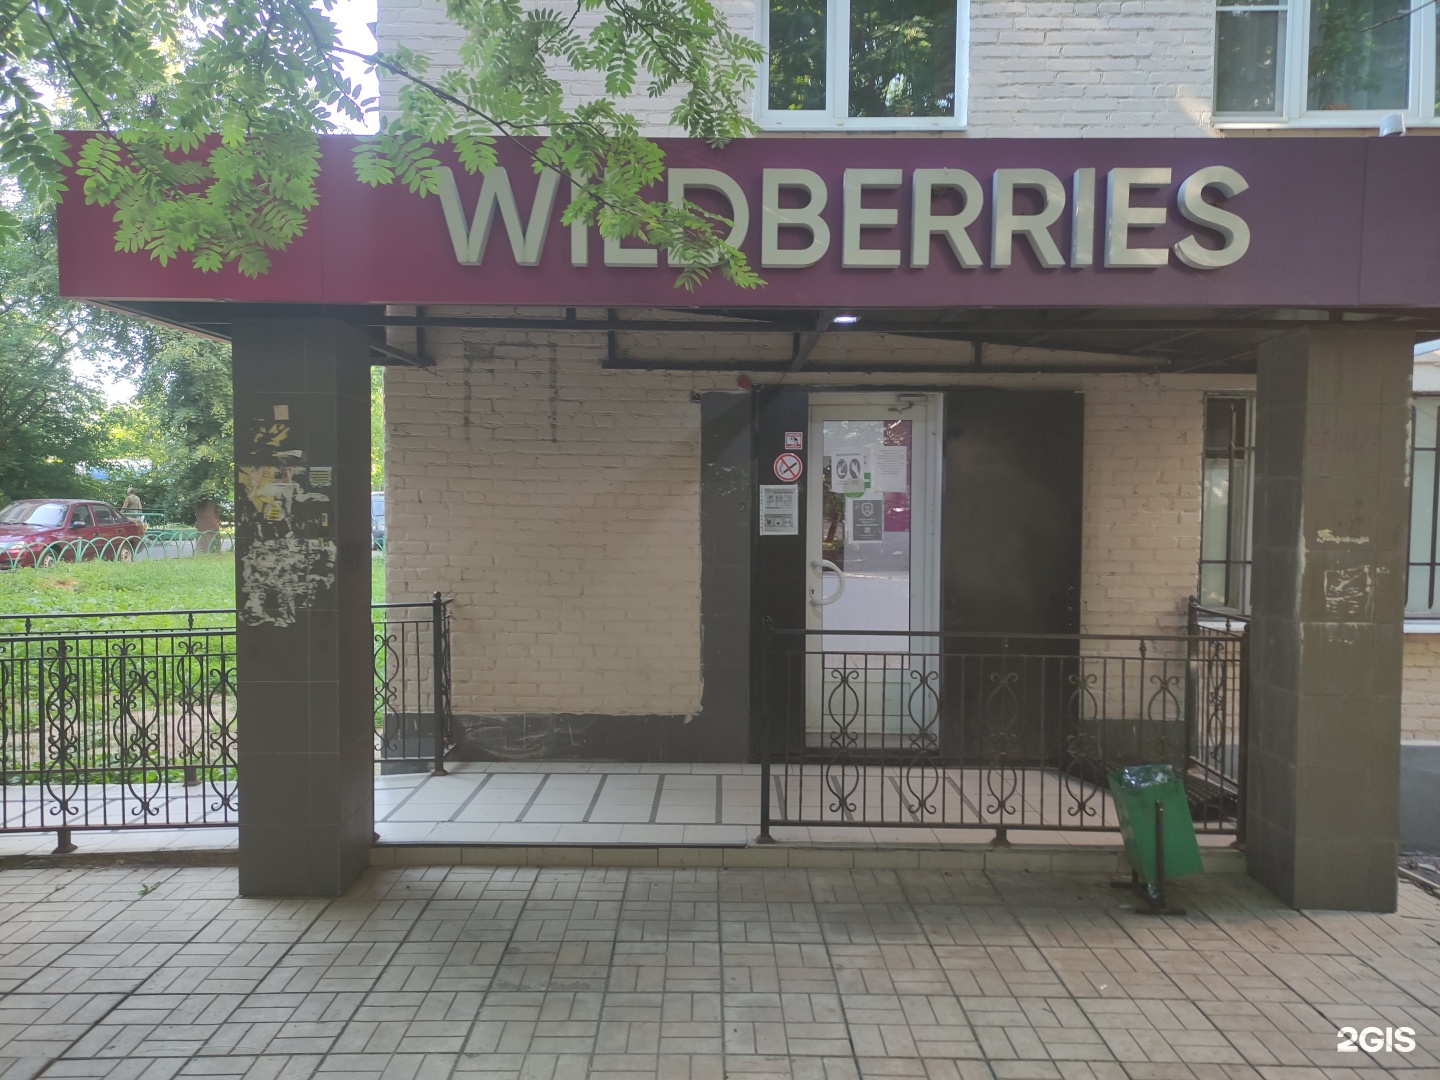 Wildberries Интернет Магазин Пушкино